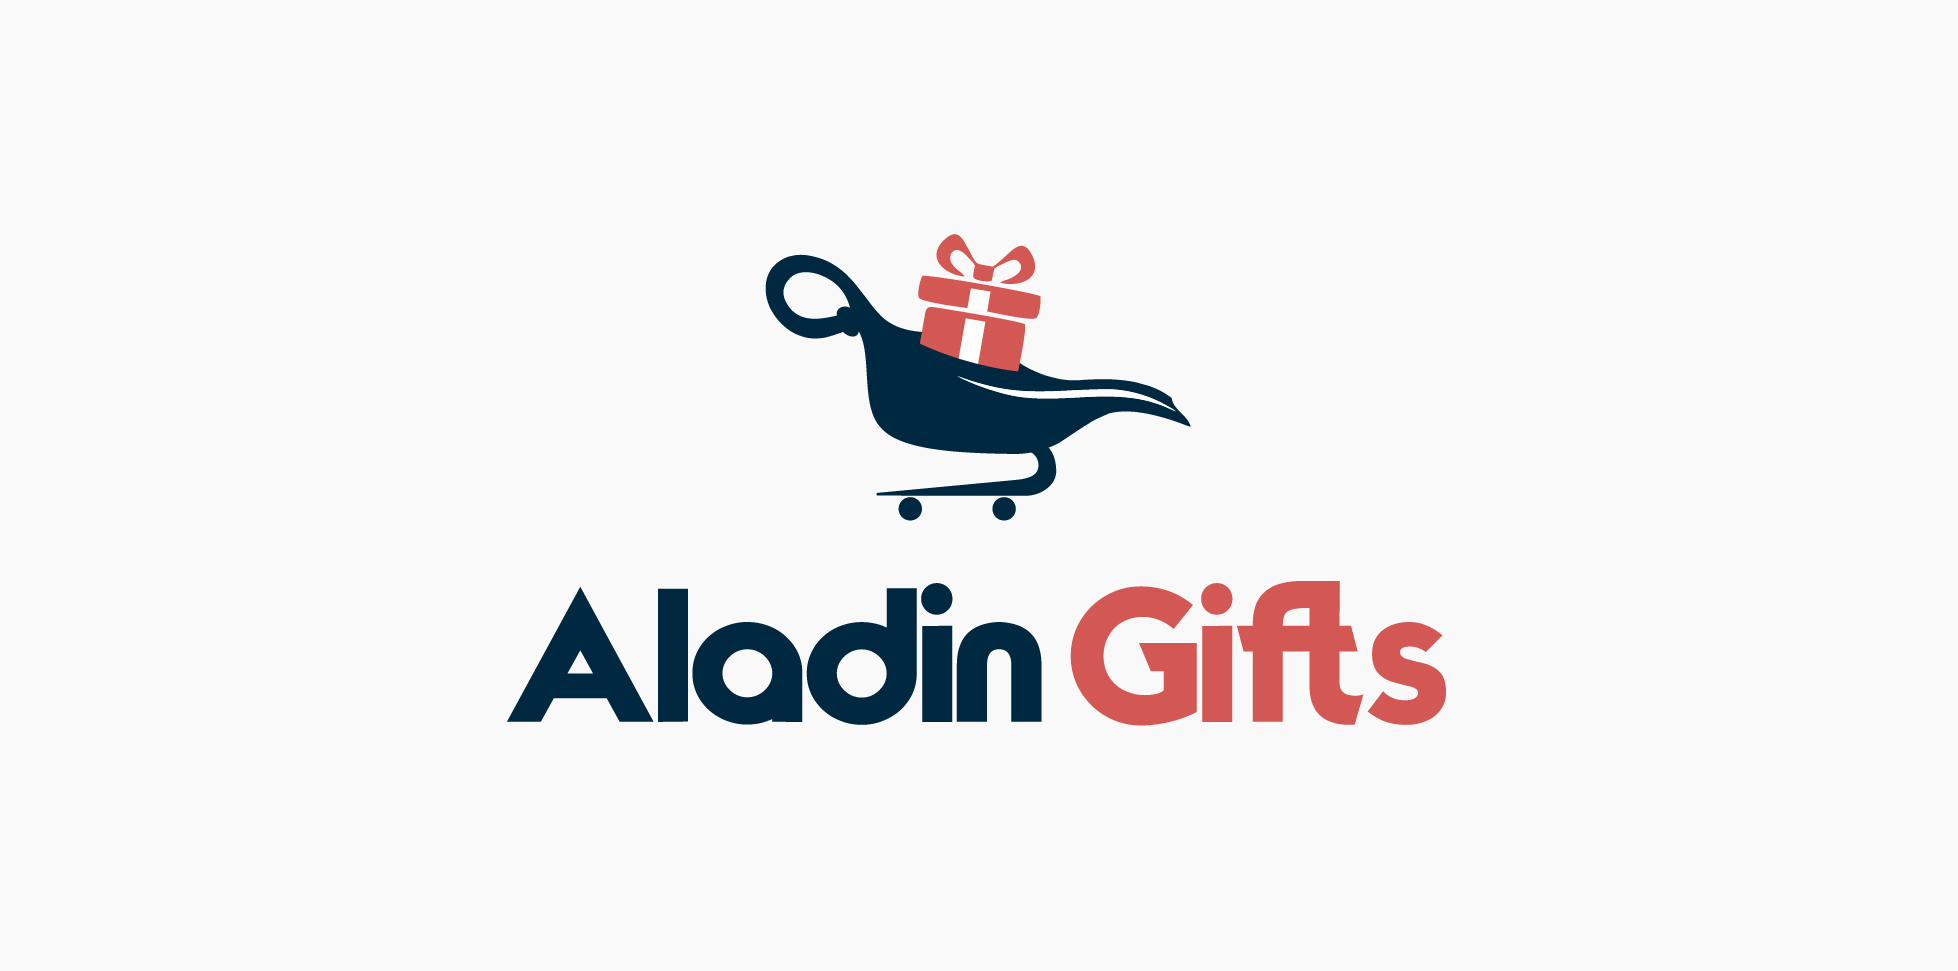 Aladin Gifts